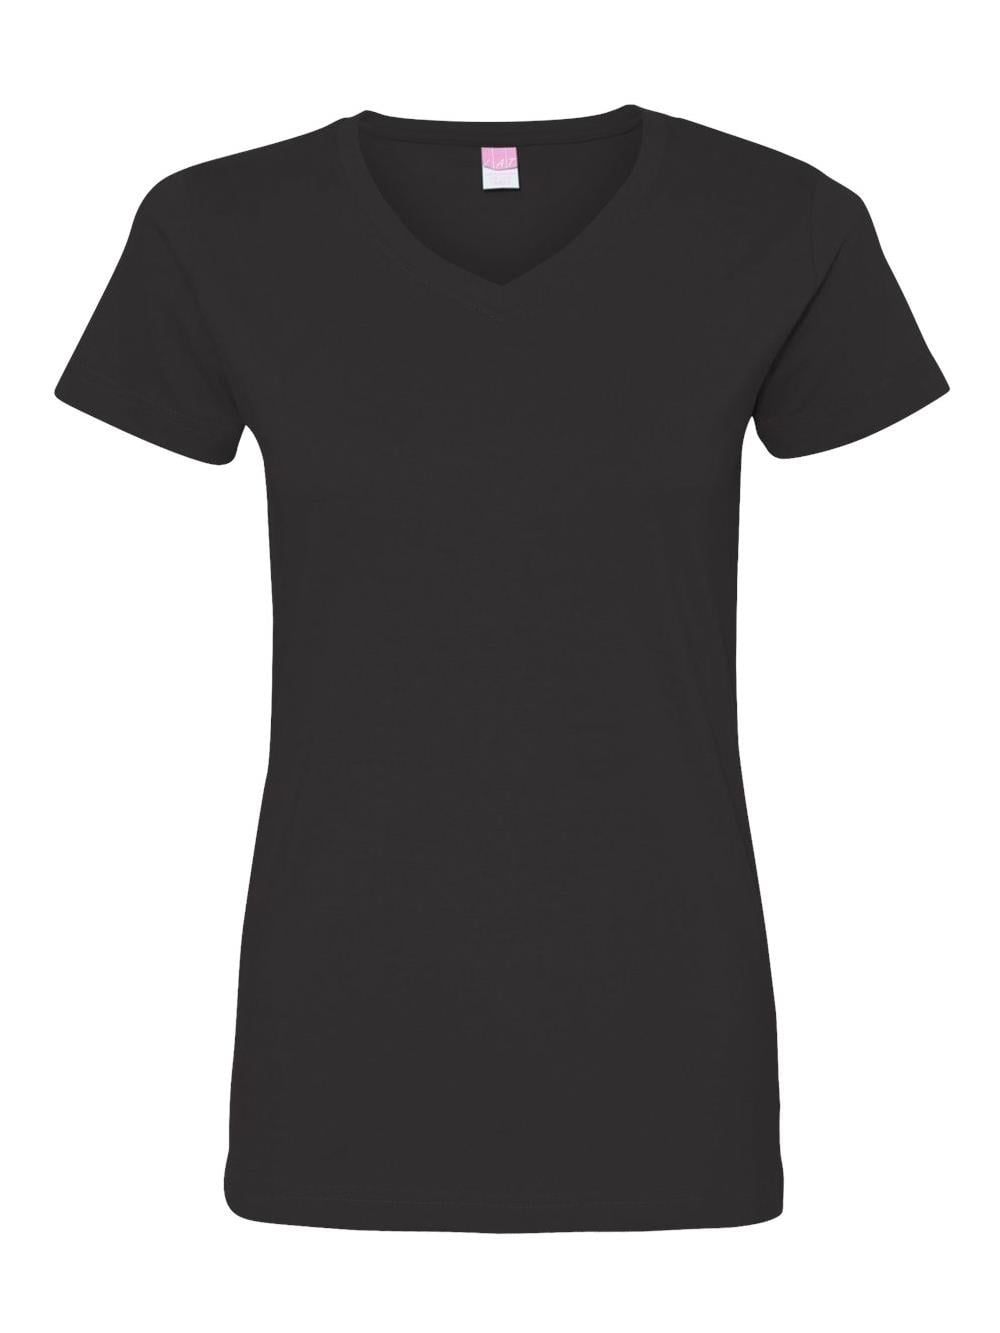 LAT - LAT T-Shirts Women's V-Neck Fine Jersey Tee 3507 - Walmart.com